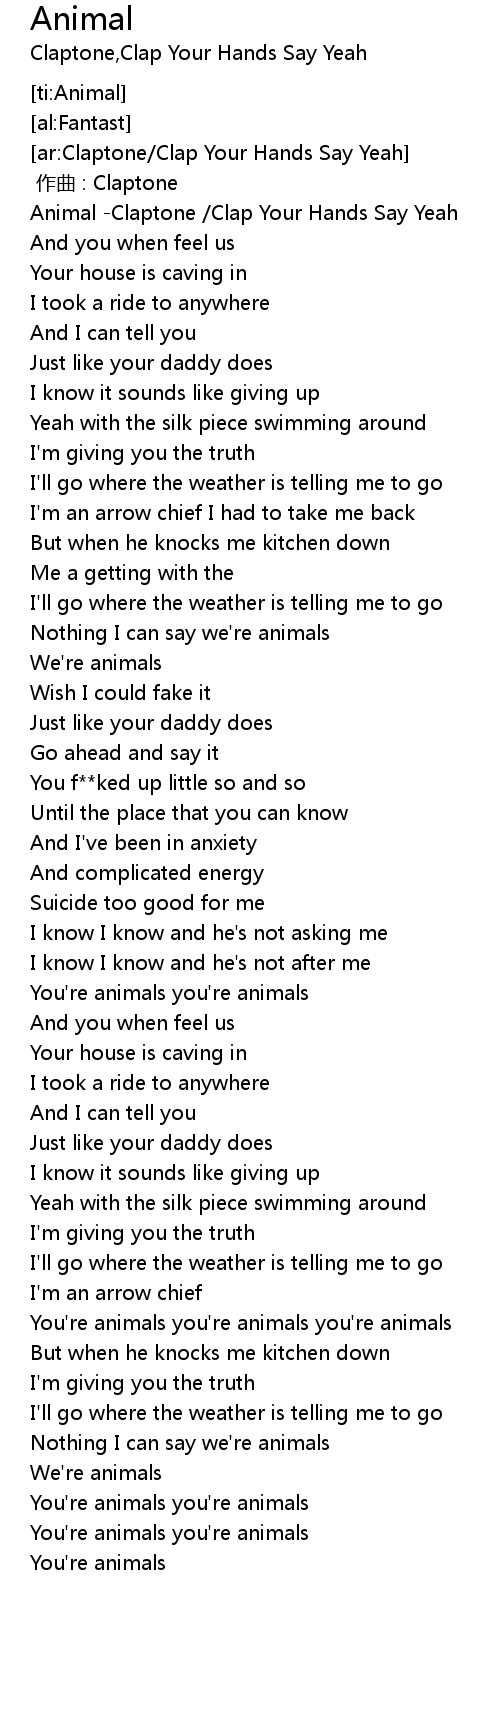 Animal Lyrics - Follow Lyrics